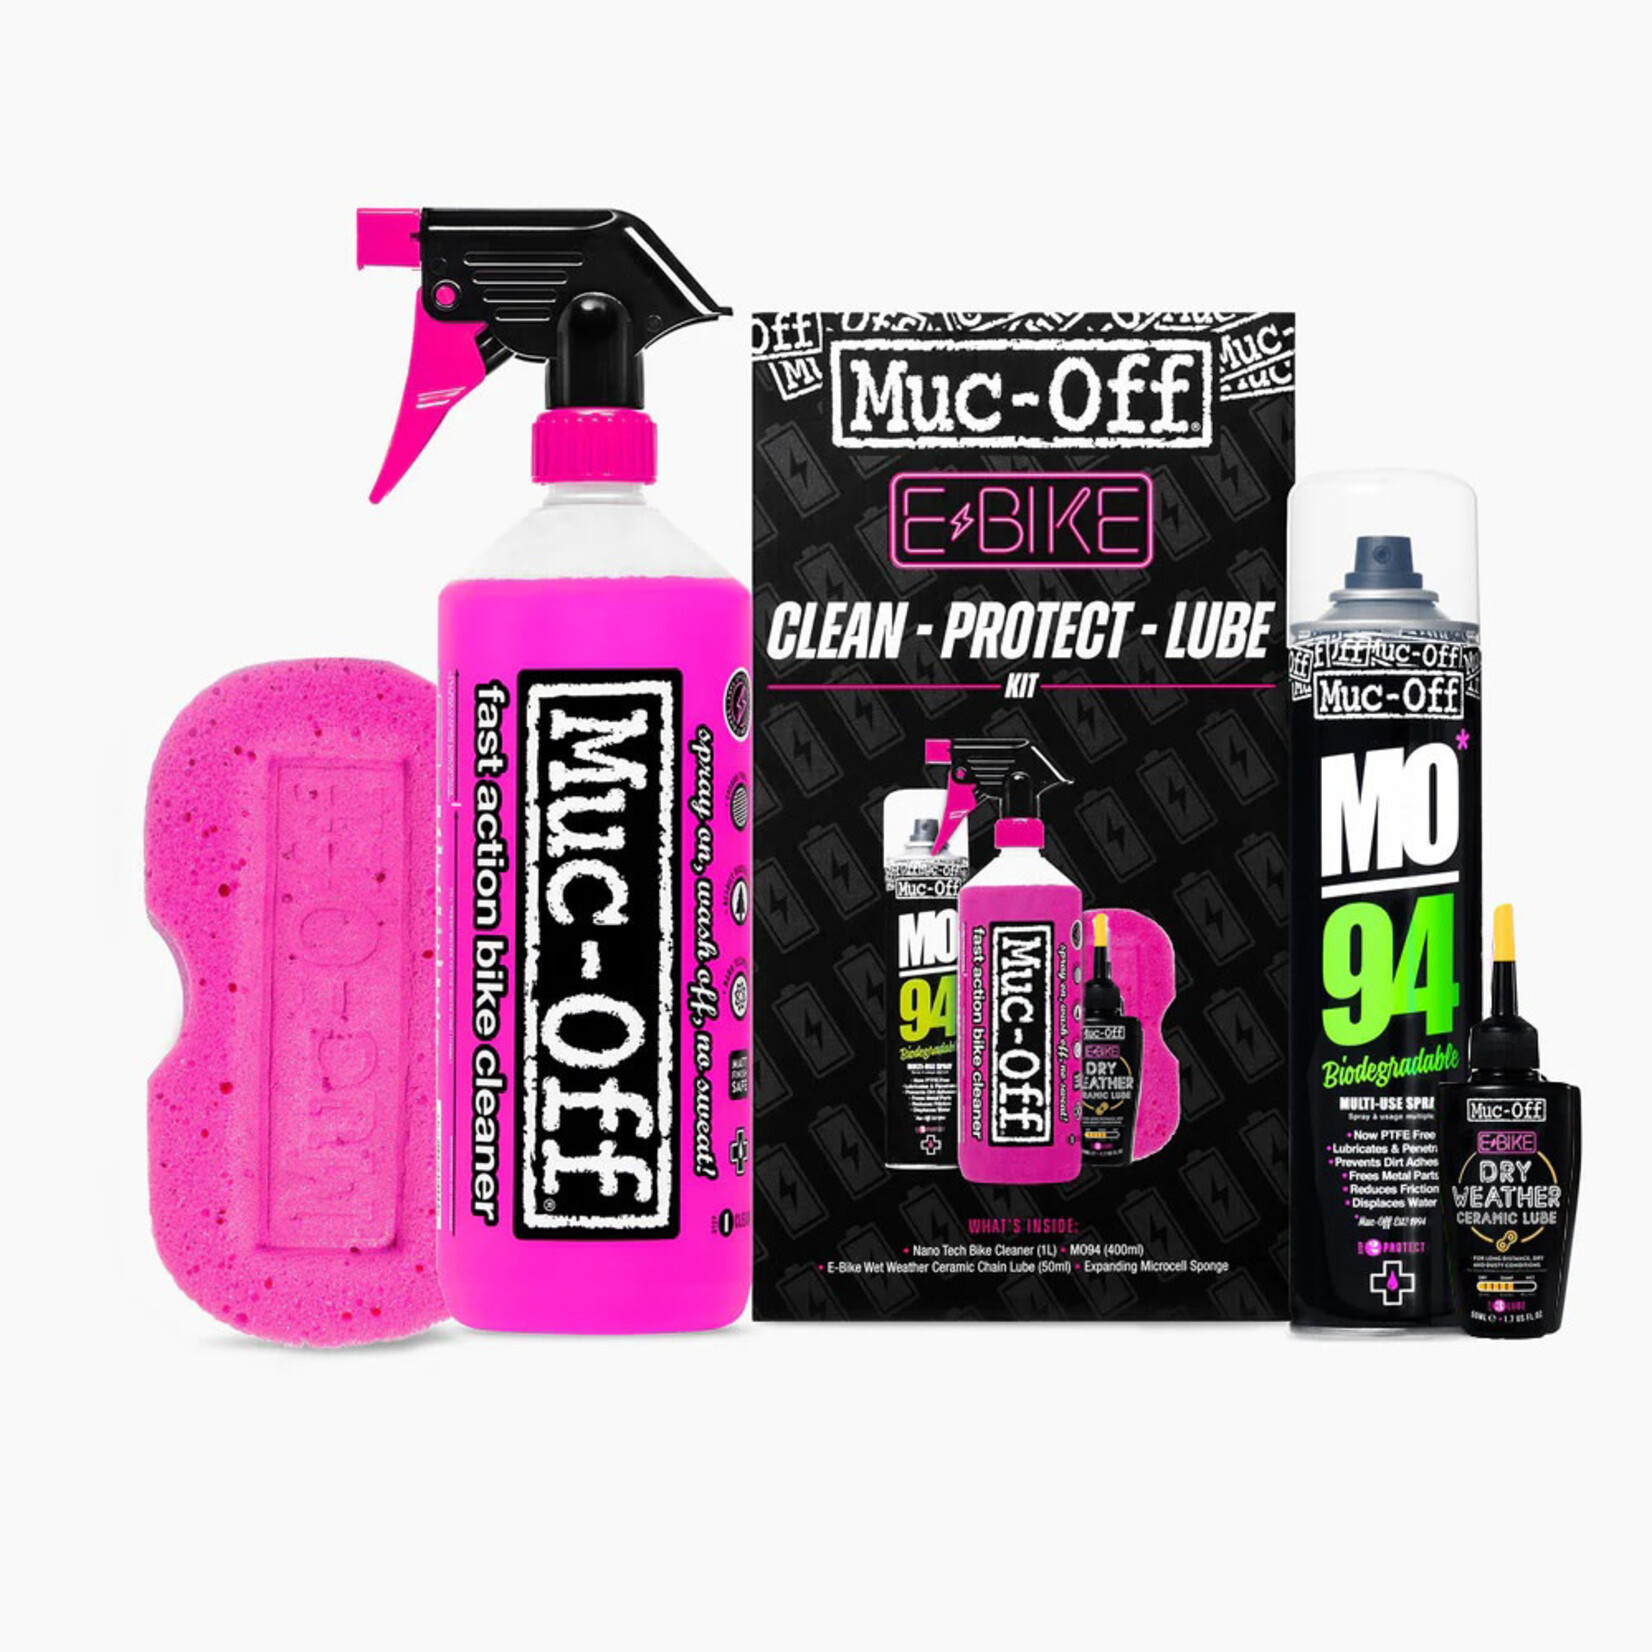 MUC-OFF Muc-Off eBike Clean, Protect & Lube Kit